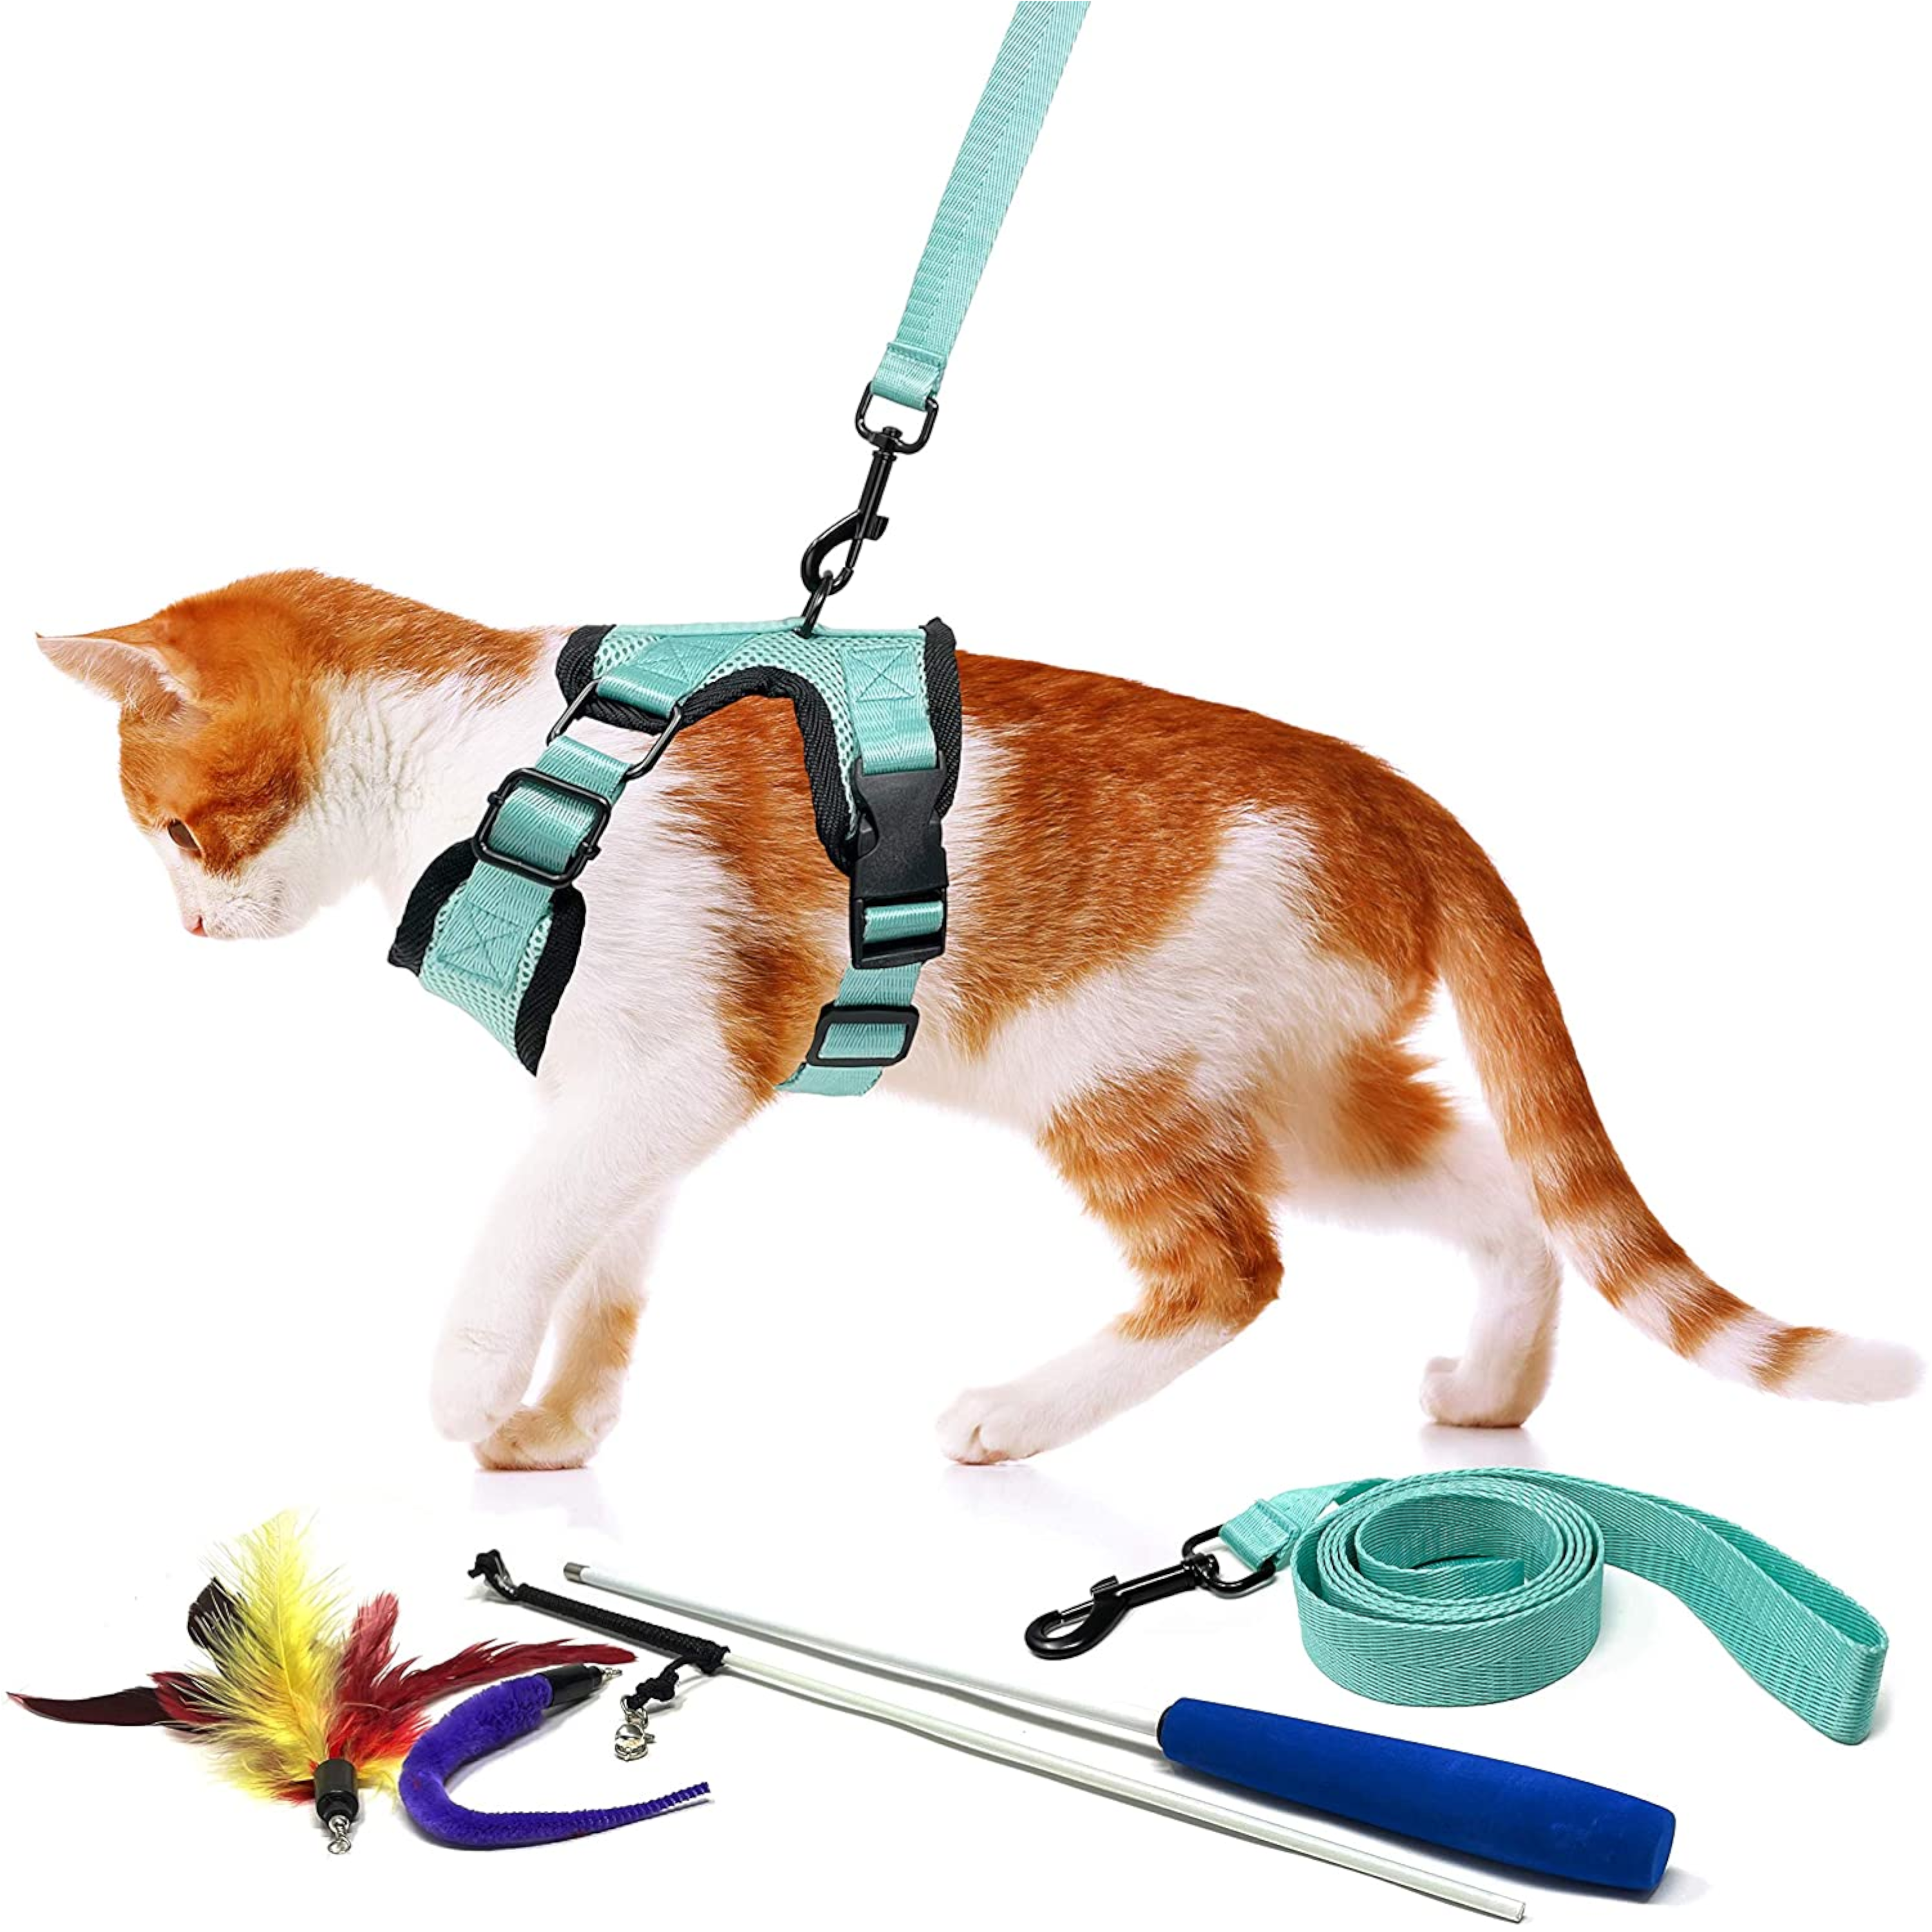 harness and leash set